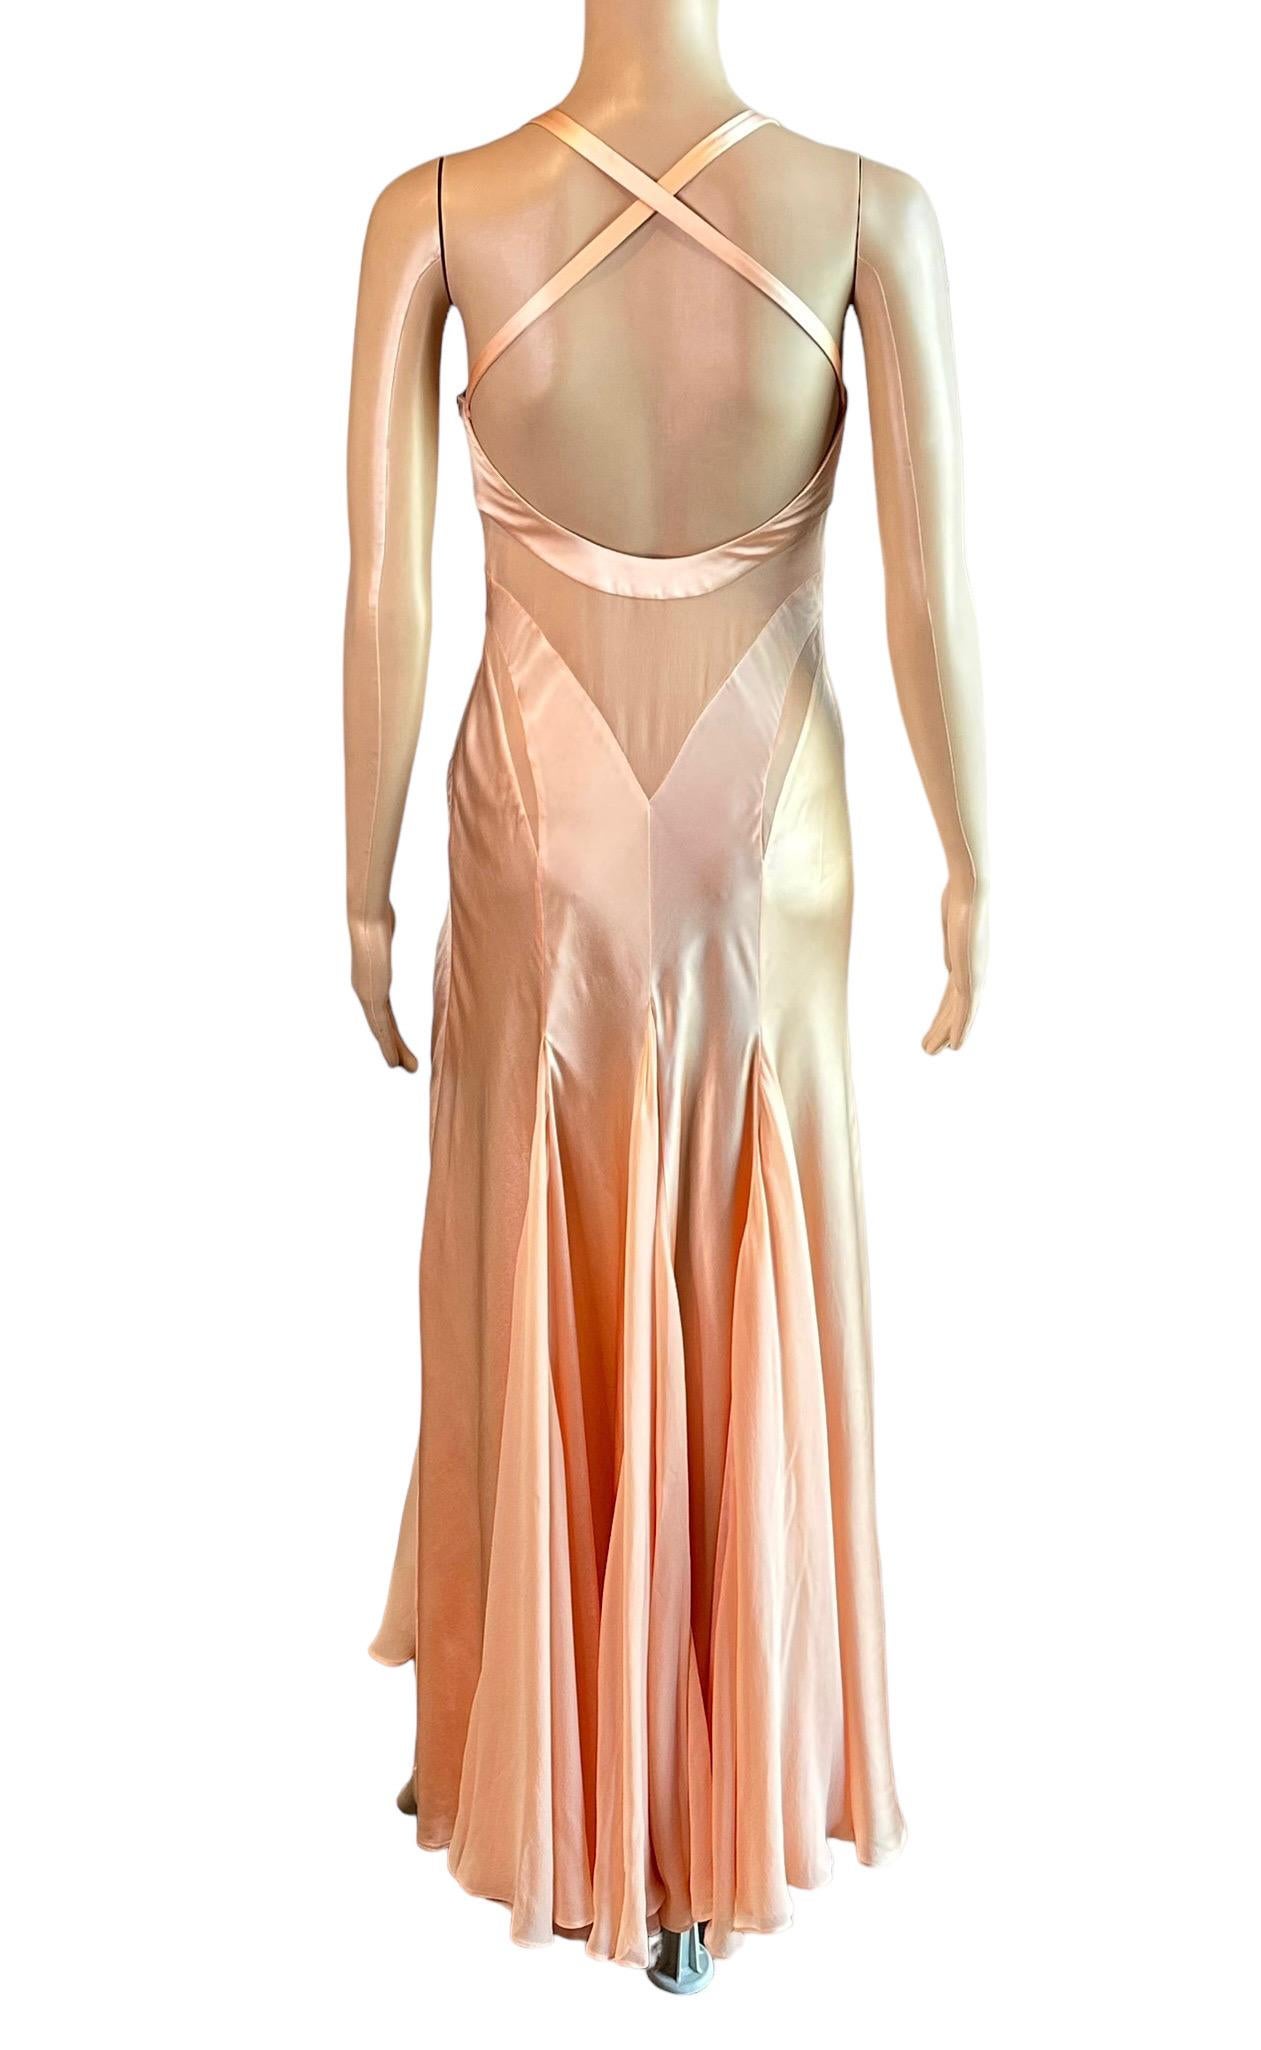 Versace S/S 2005 Runway Sheer Panels Medusa Logo Silk Slip Evening Dress Gown  In Good Condition For Sale In Naples, FL